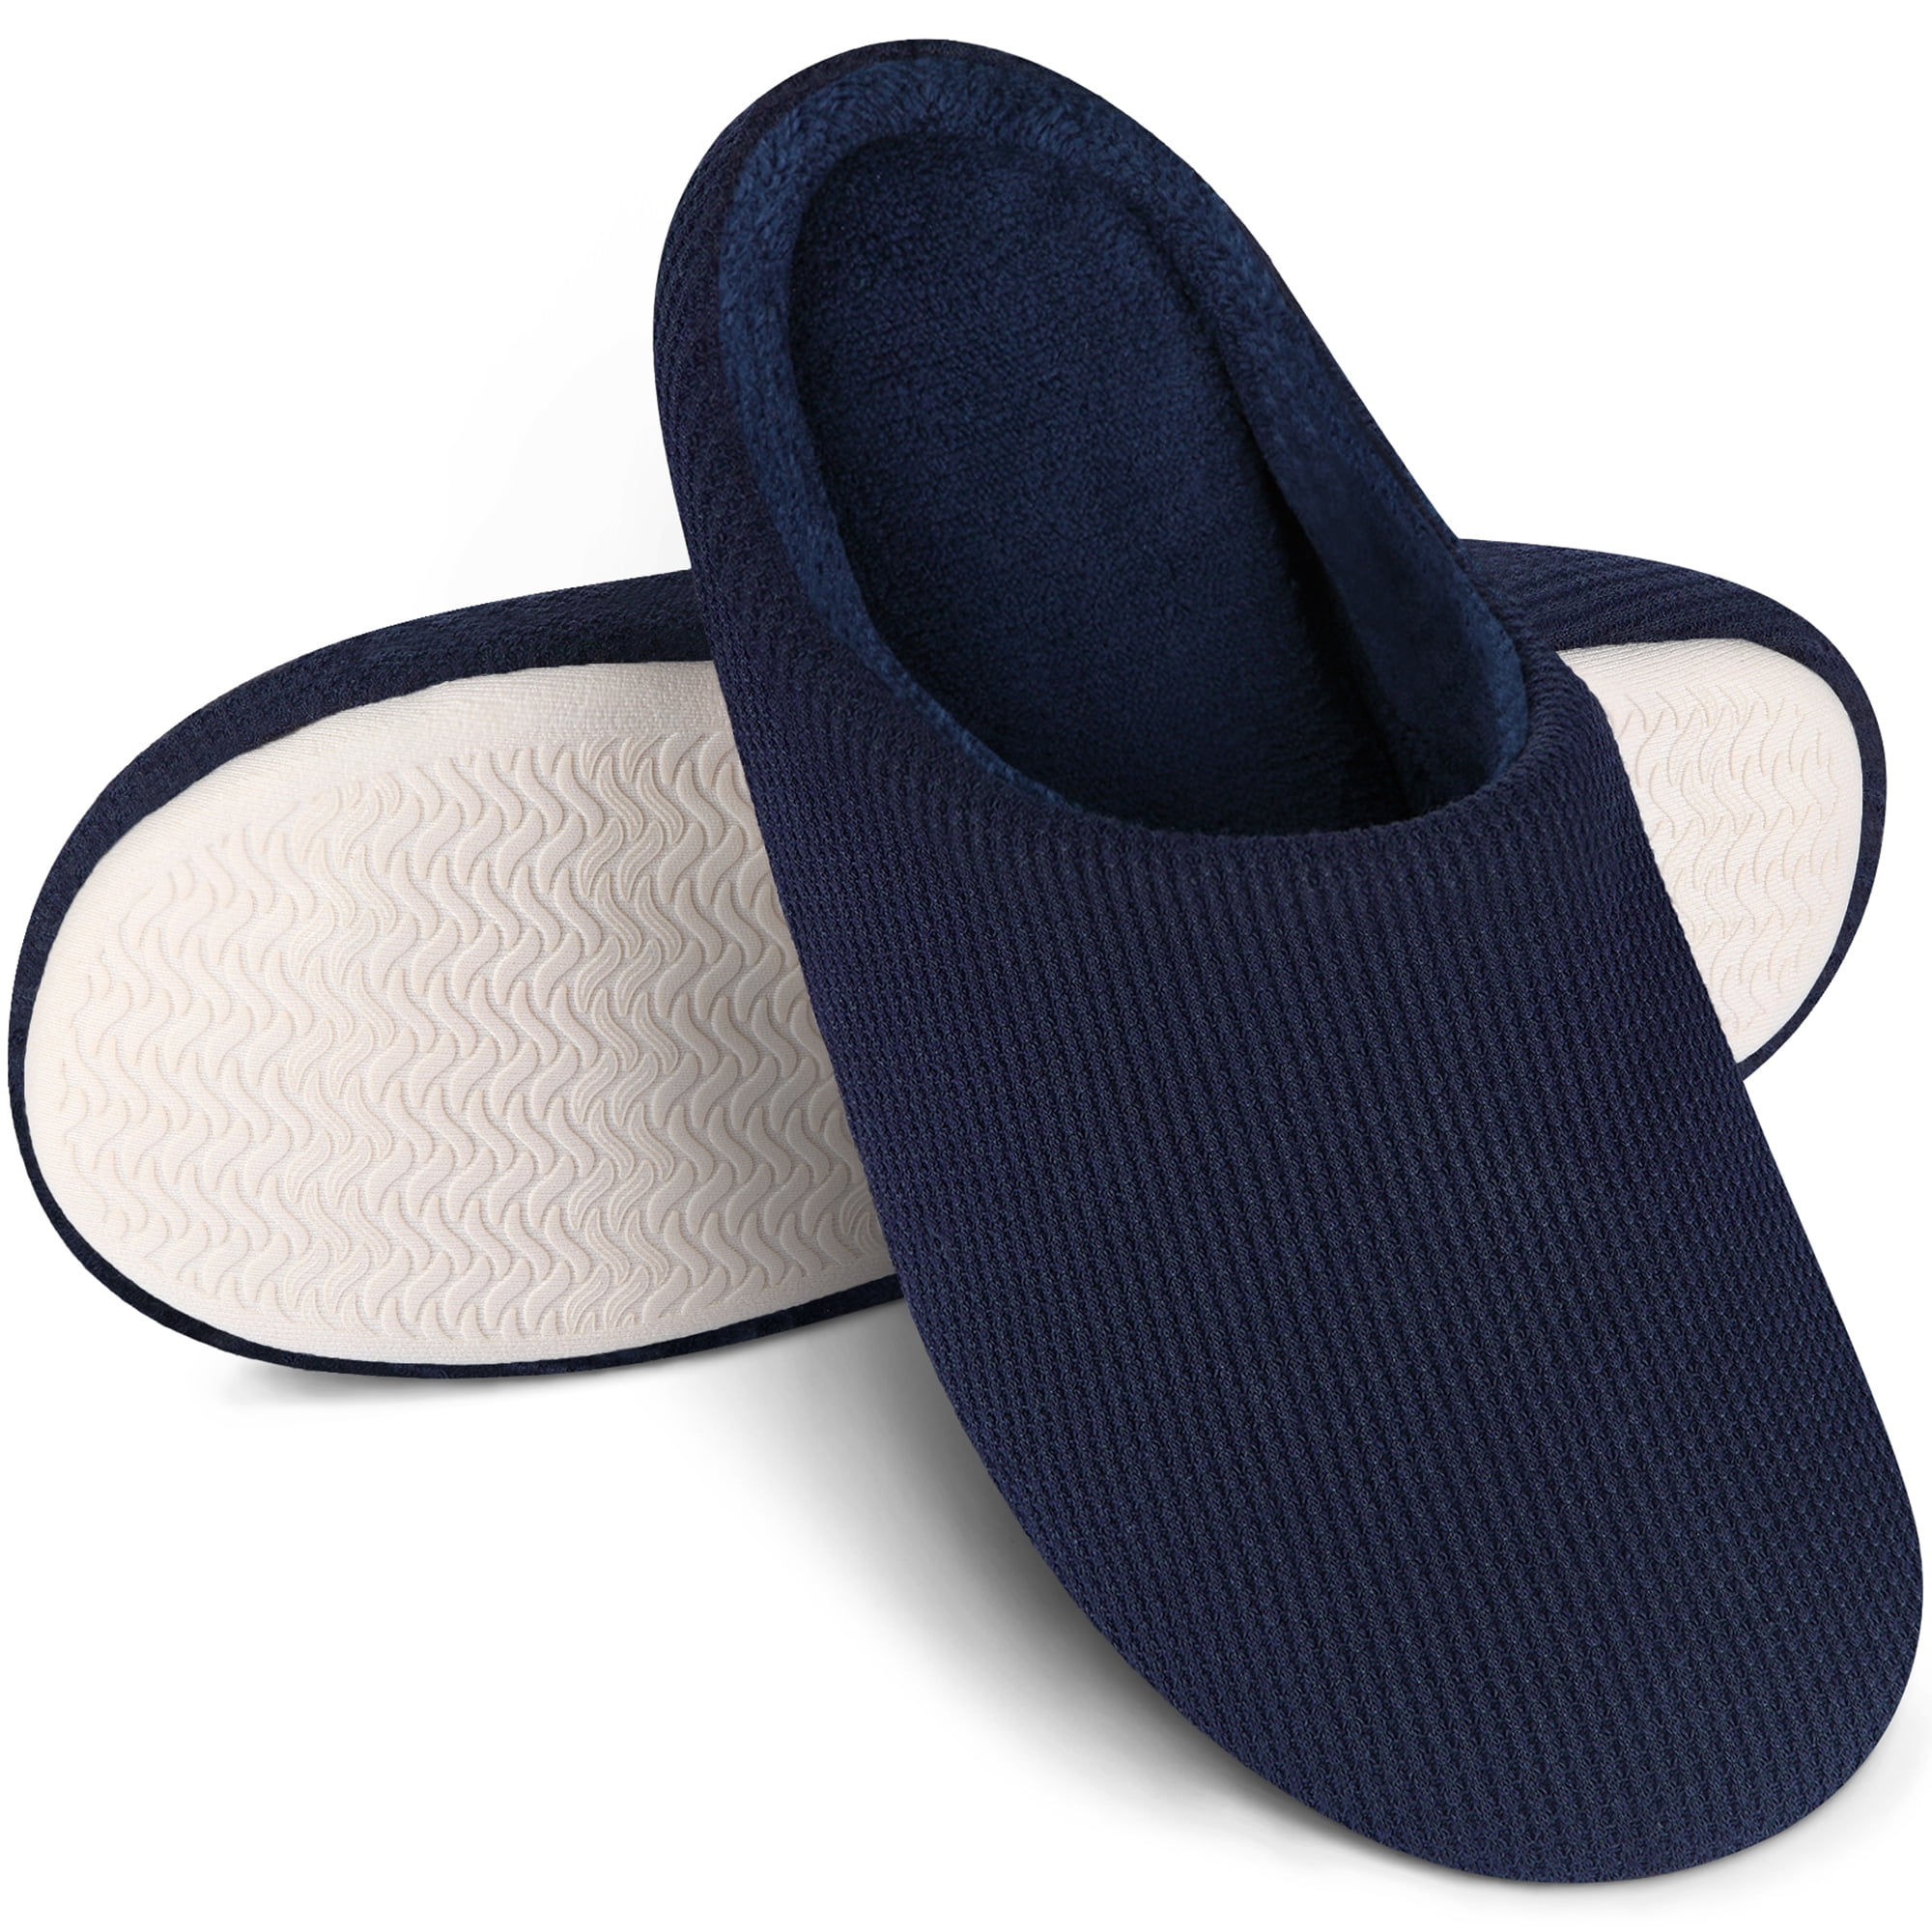 Mens New Blue Brown Stripe Flat Casual Comfort Cosy Mule Slippers Slip On UK 7-8 